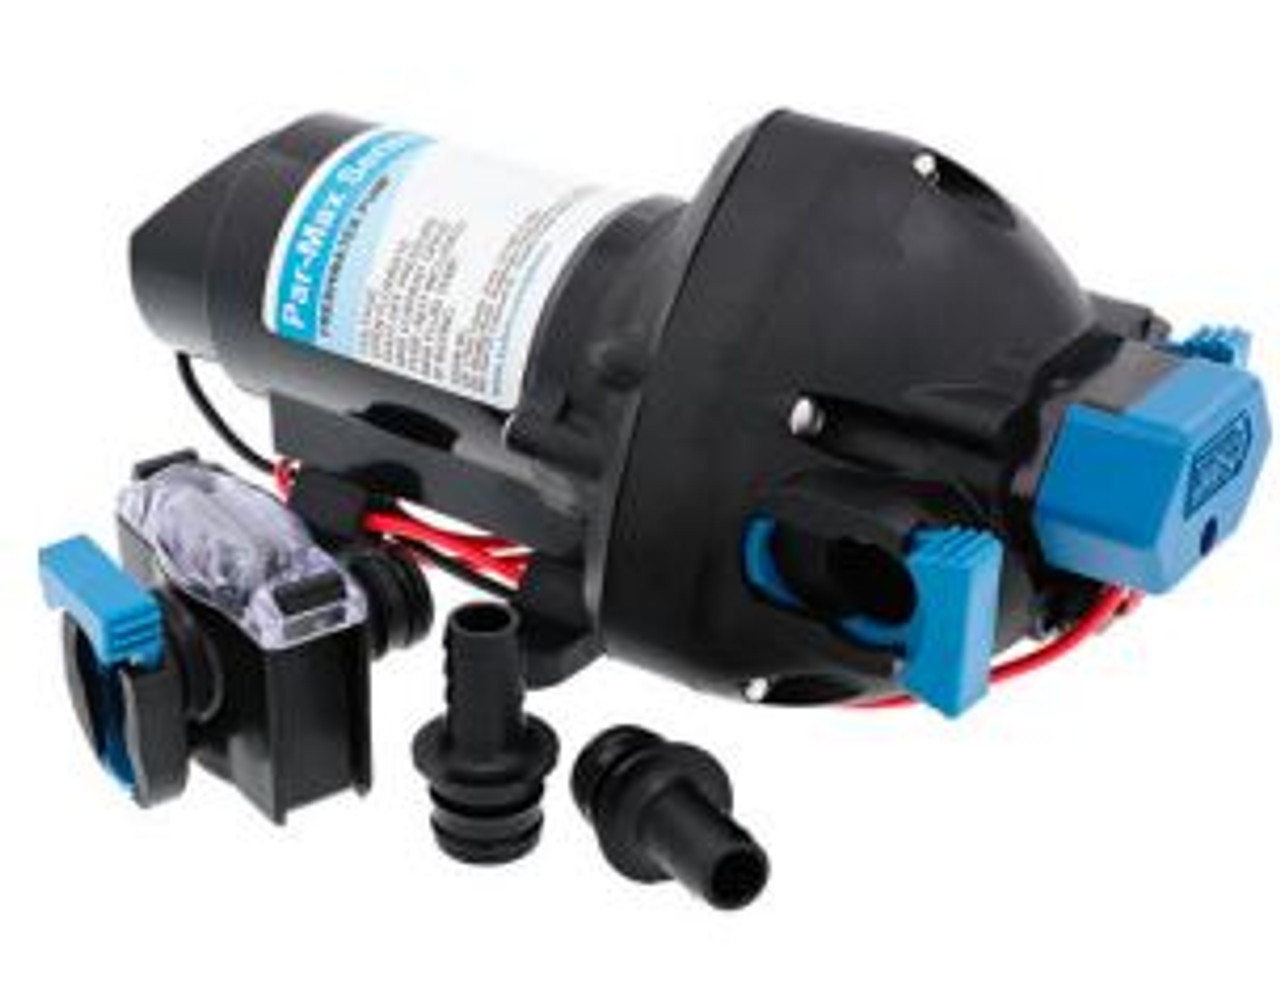 Par-Max 3.0 Freshwater Pump